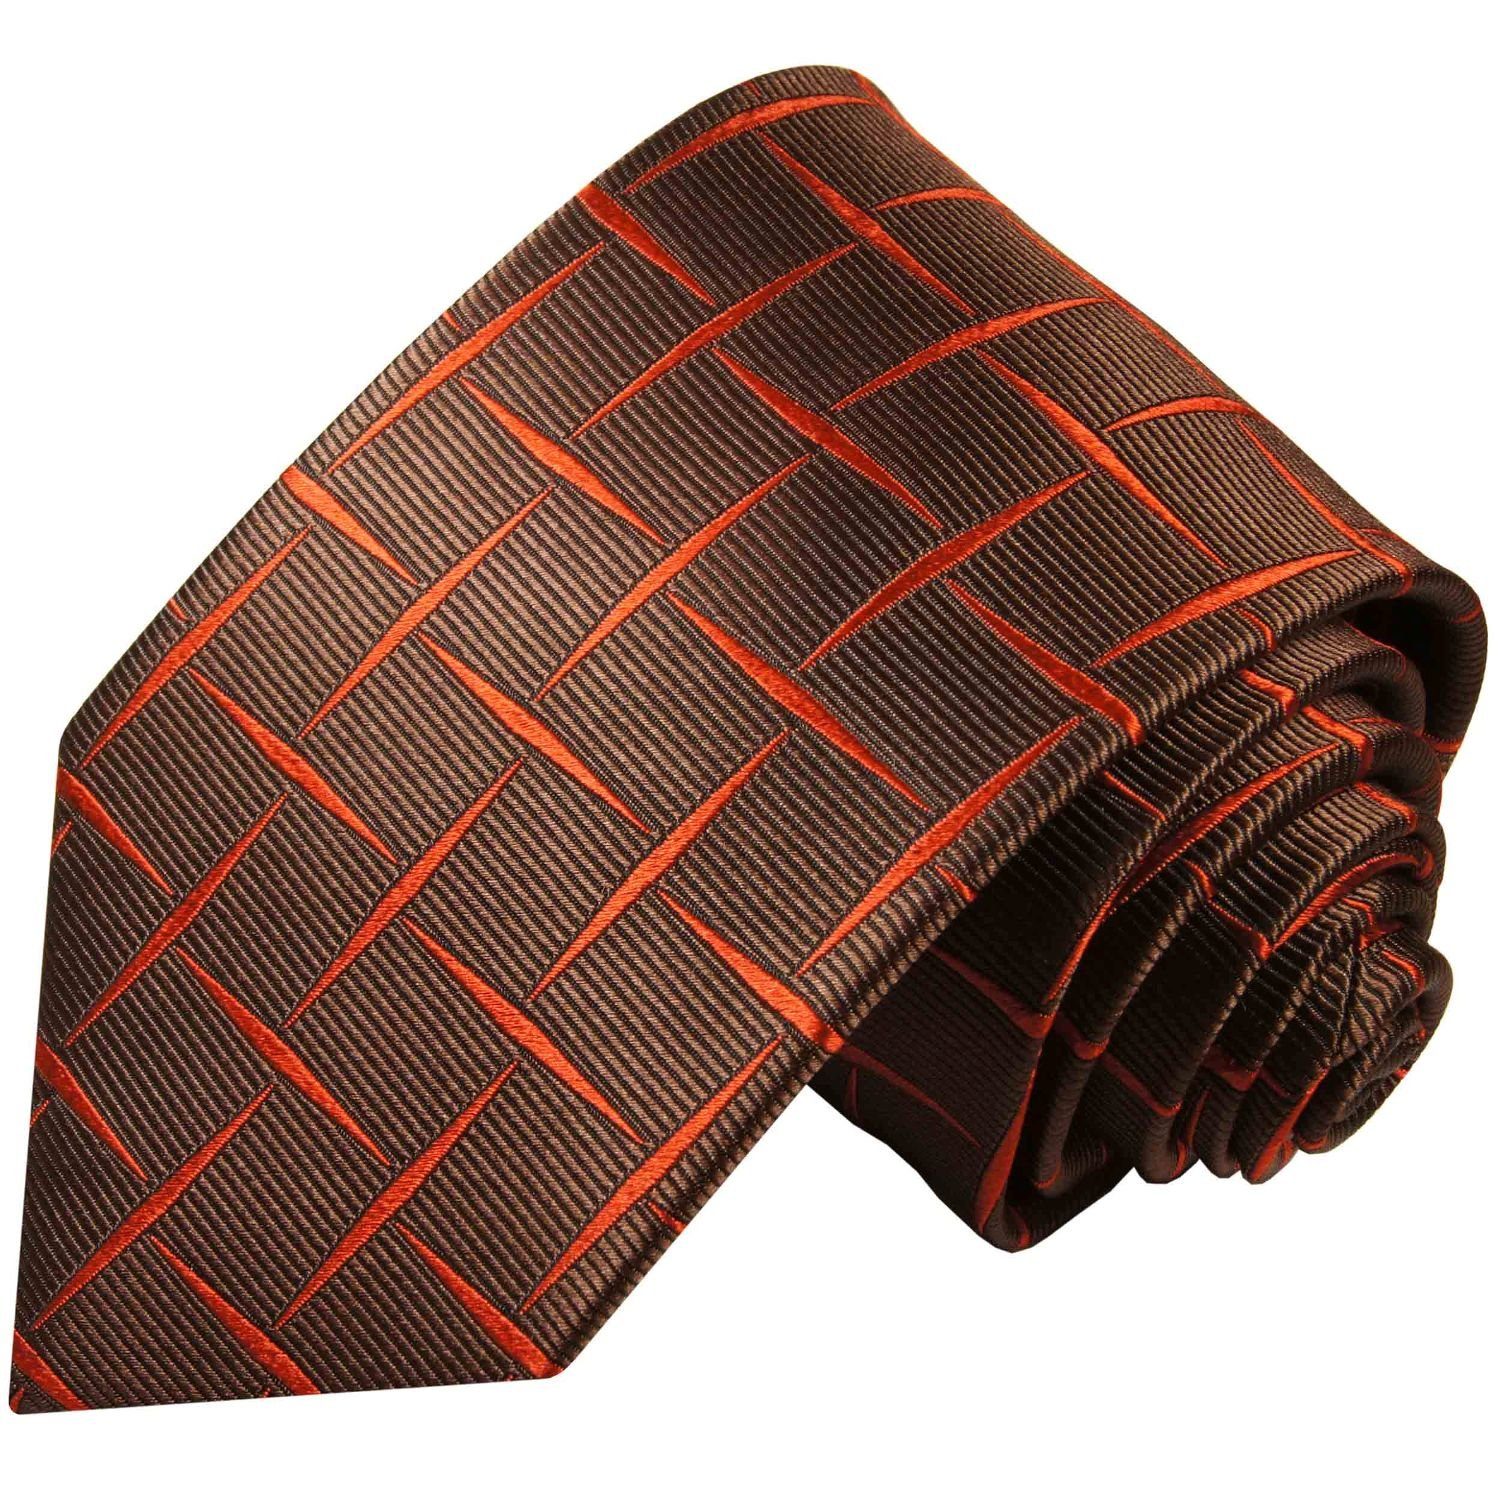 Paul Malone Krawatte Designer Seidenkrawatte Herren Schlips modern kariert 100% Seide Schmal (6cm), rotbraun orange 412